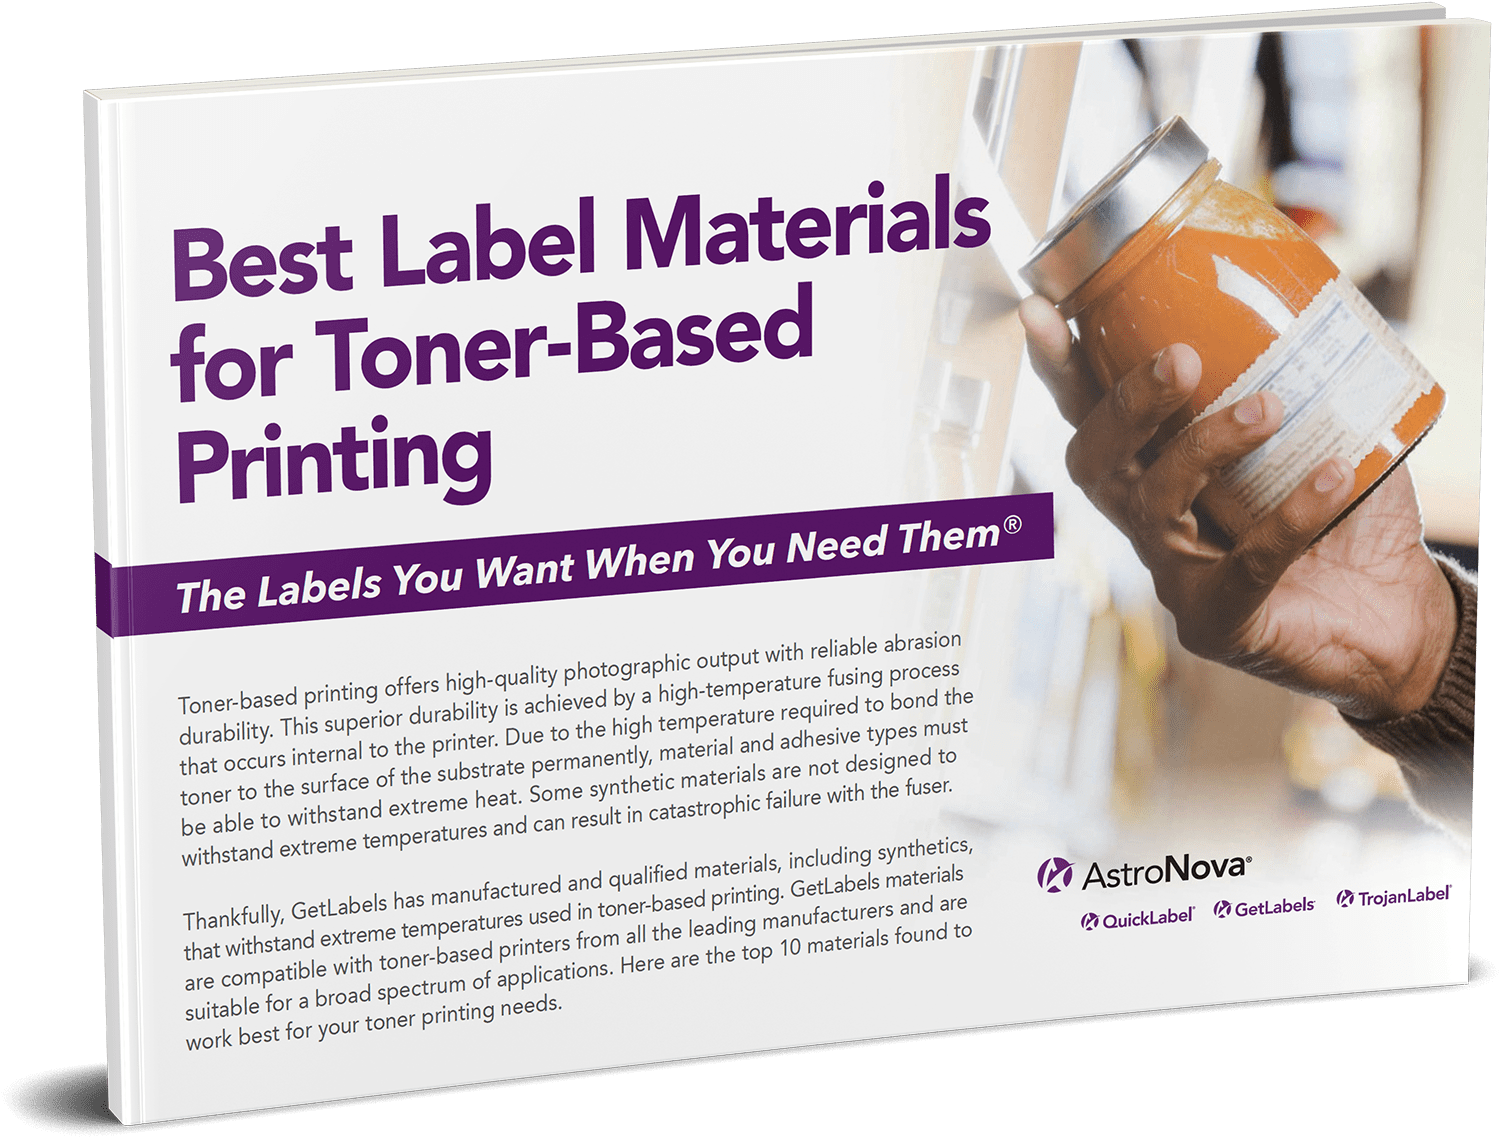 Best Label Materials for Toner-Based Printing